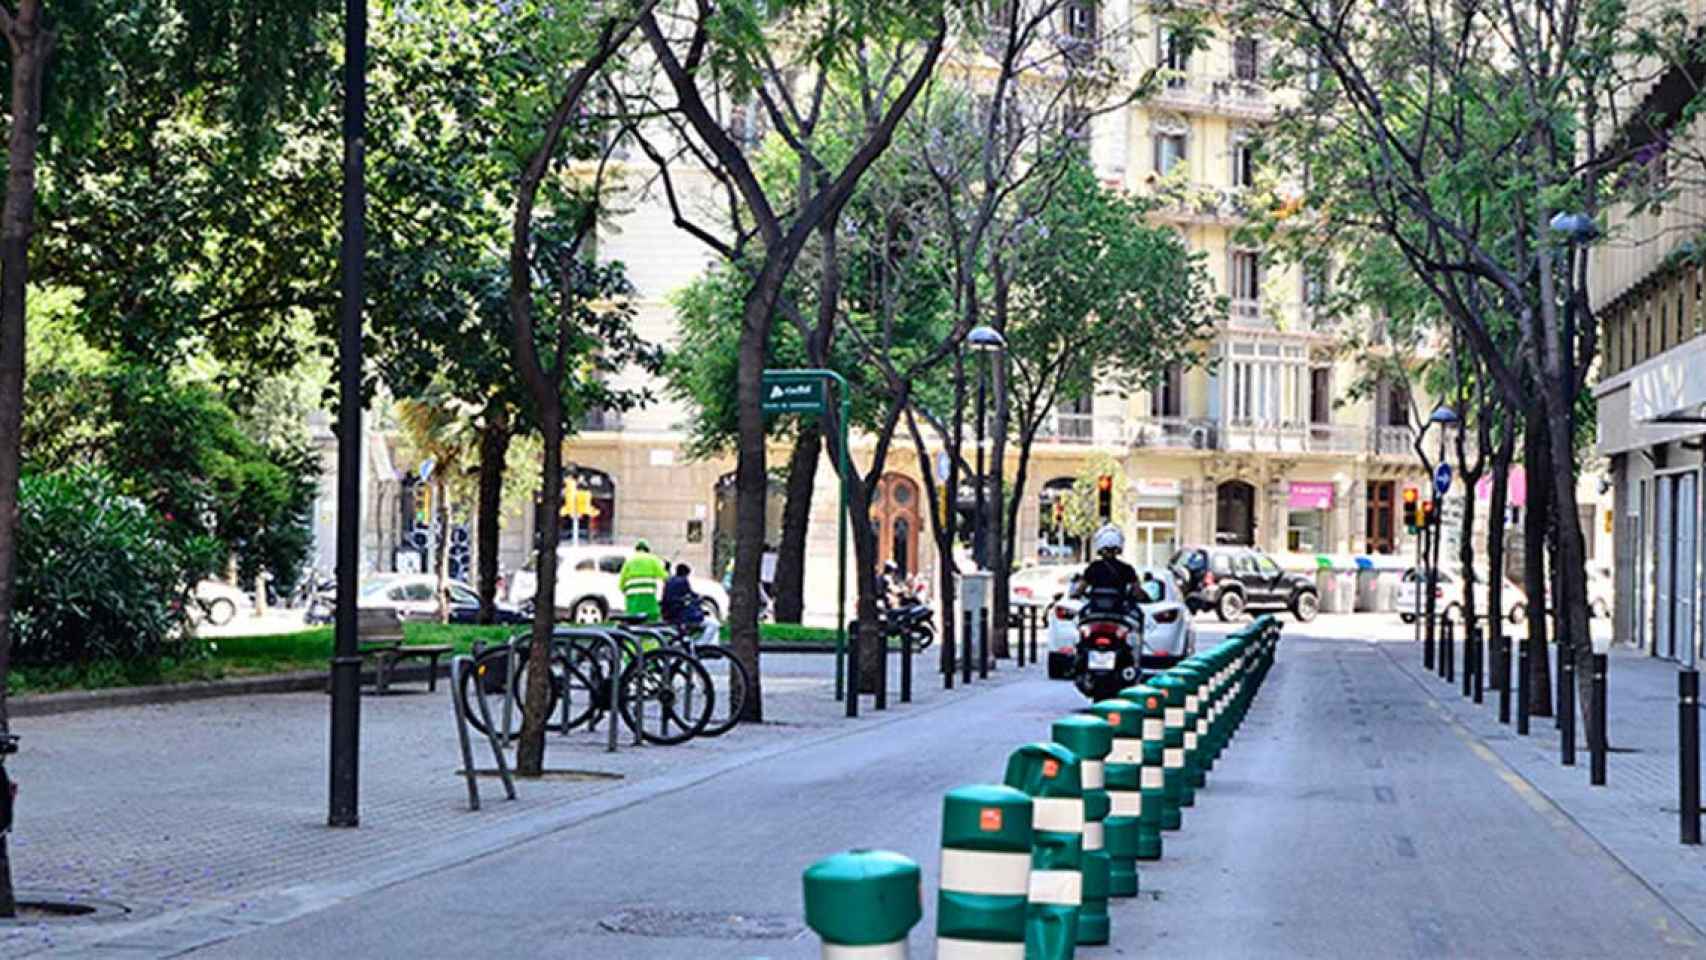 La plaza Letamendi, en el Eixample de Barcelona, donde se ubicaba Talleres Tejada  / Casaatico.com